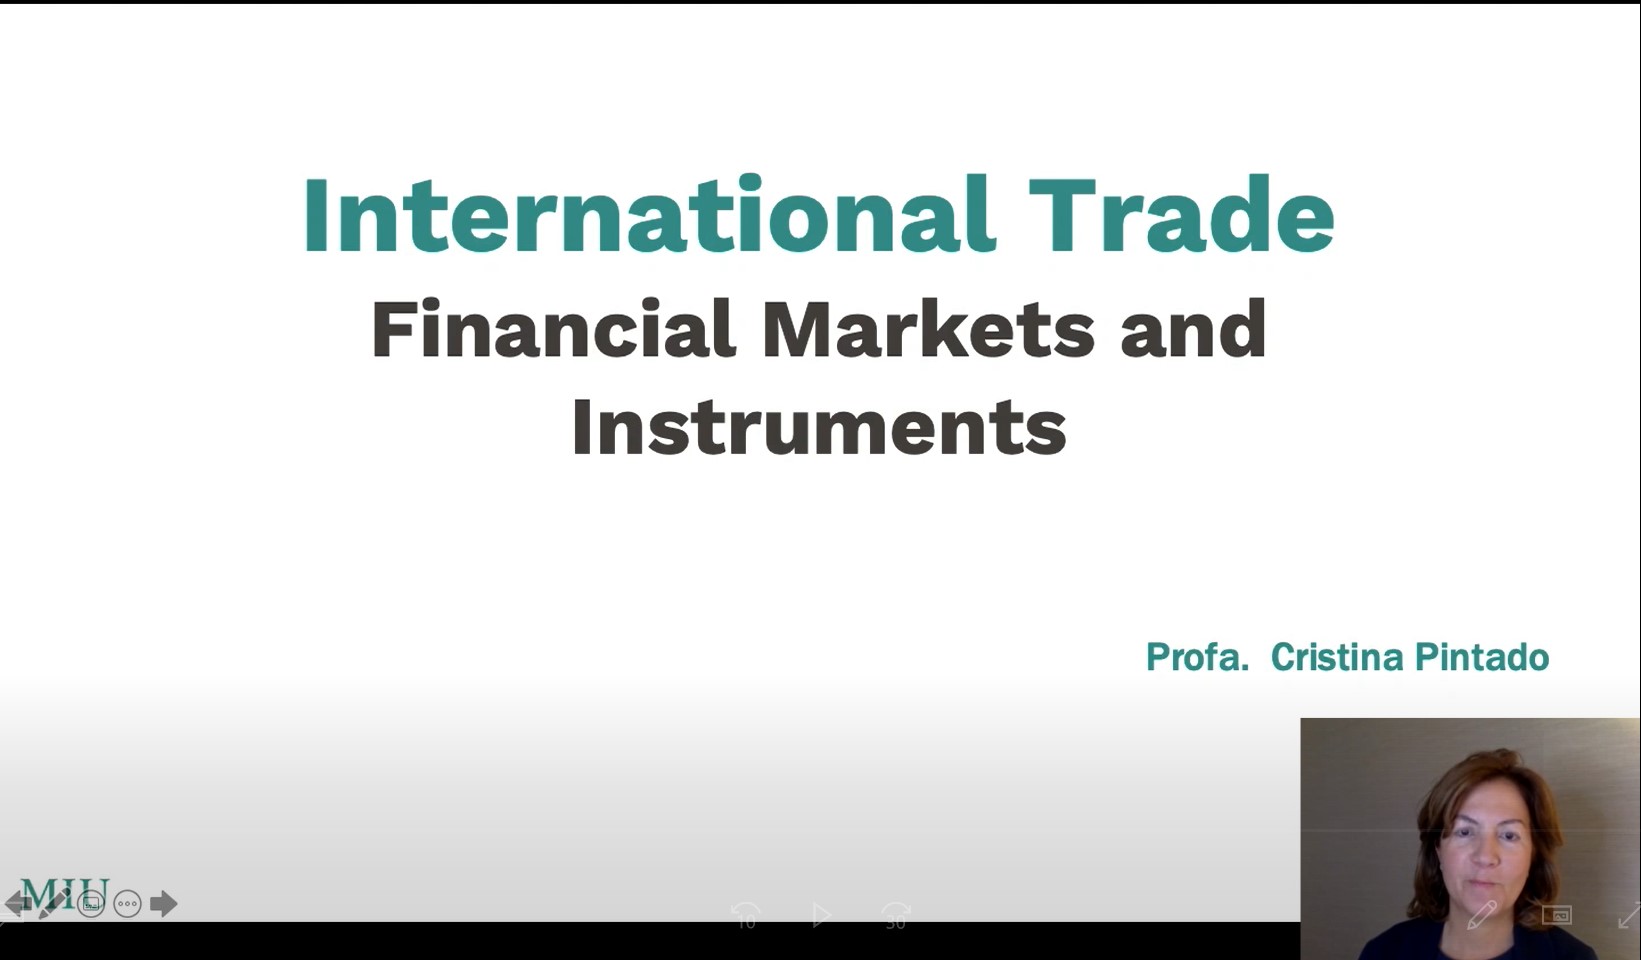 International-Trade